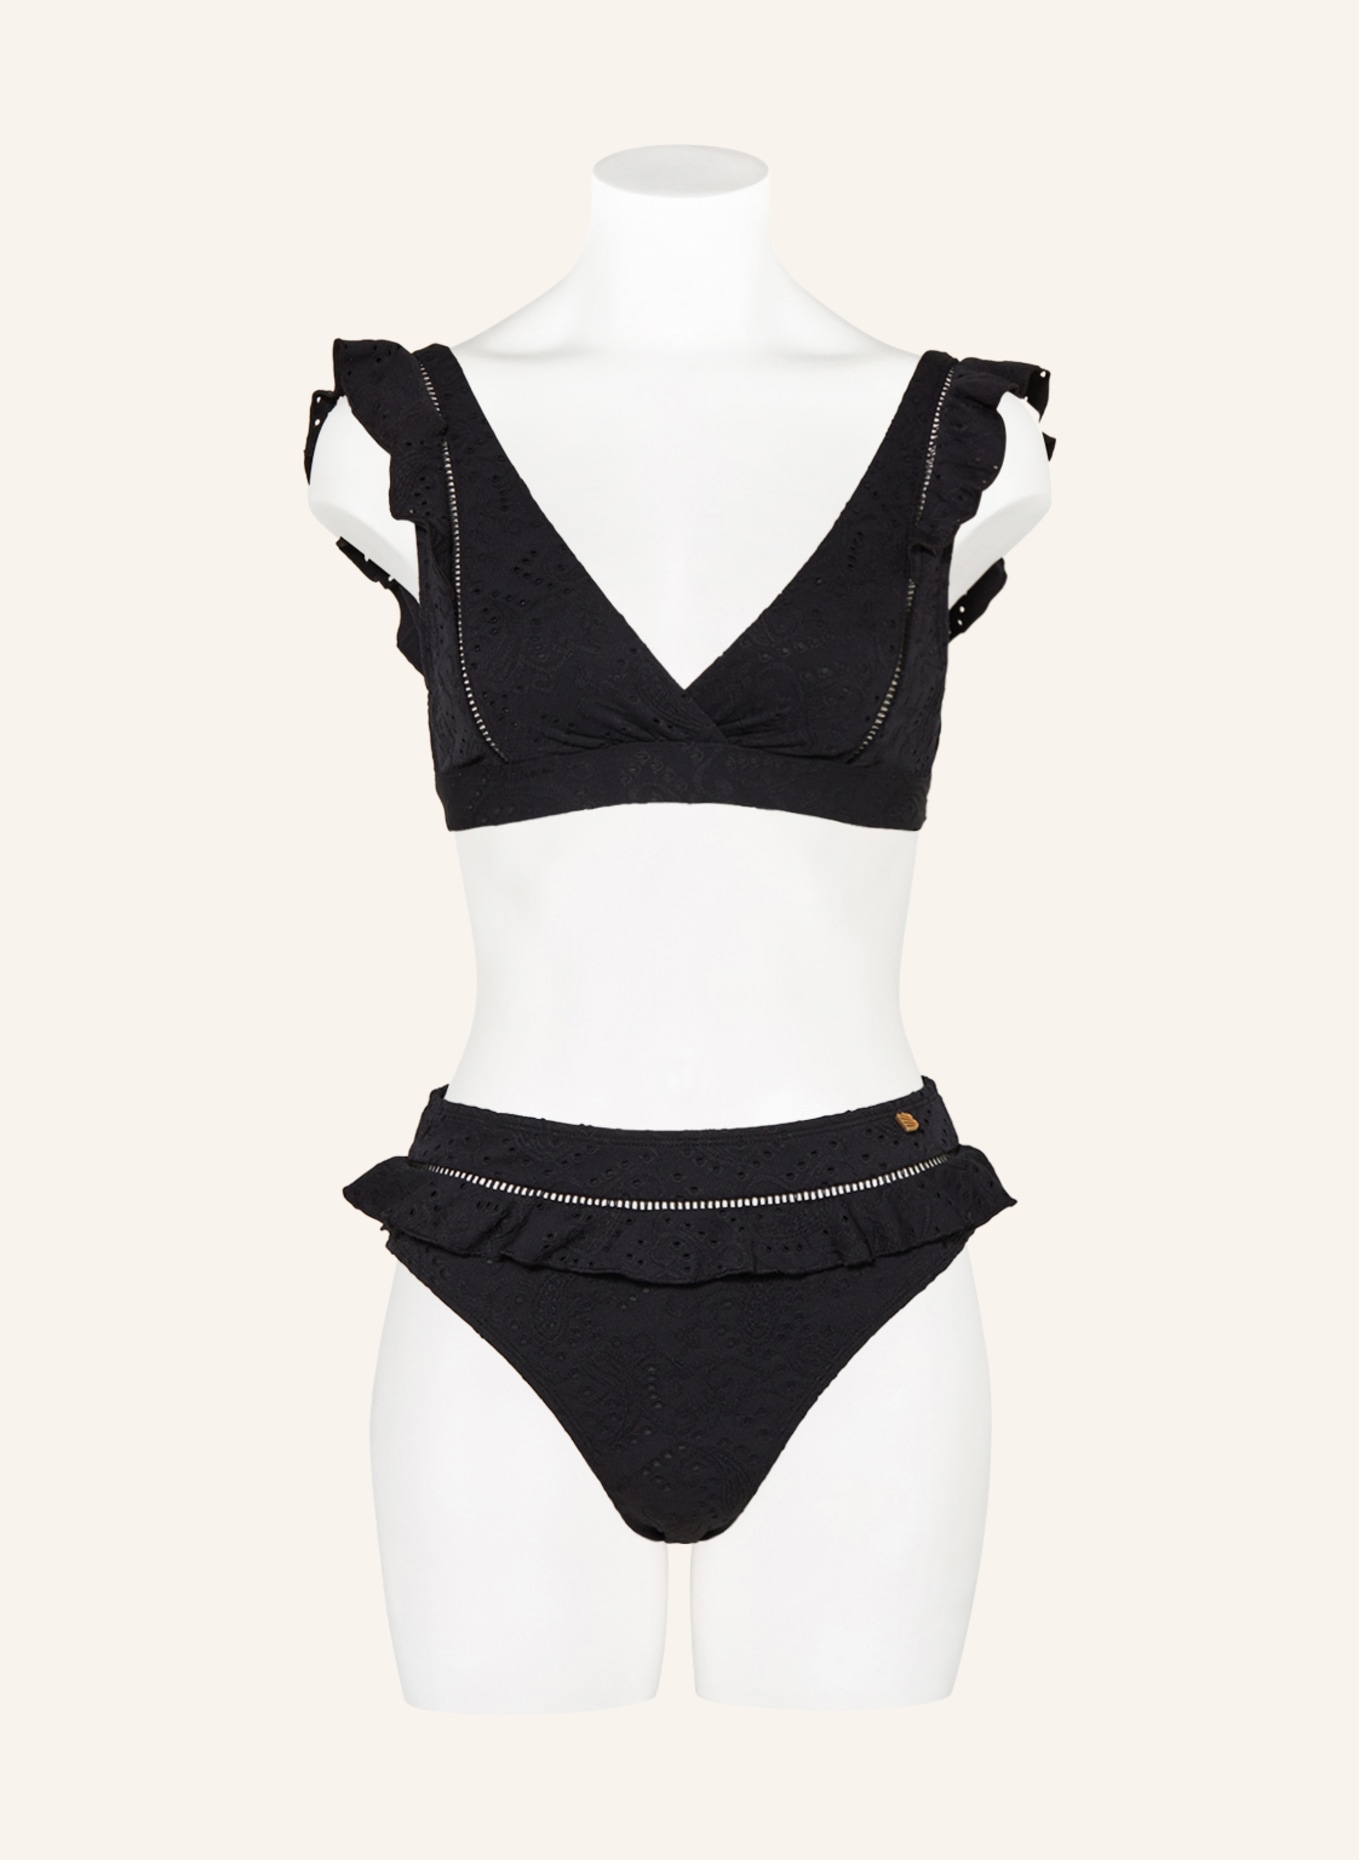 BEACHLIFE Bralette-Bikini-Top BLACK EMBROIDERY, Farbe: SCHWARZ (Bild 2)